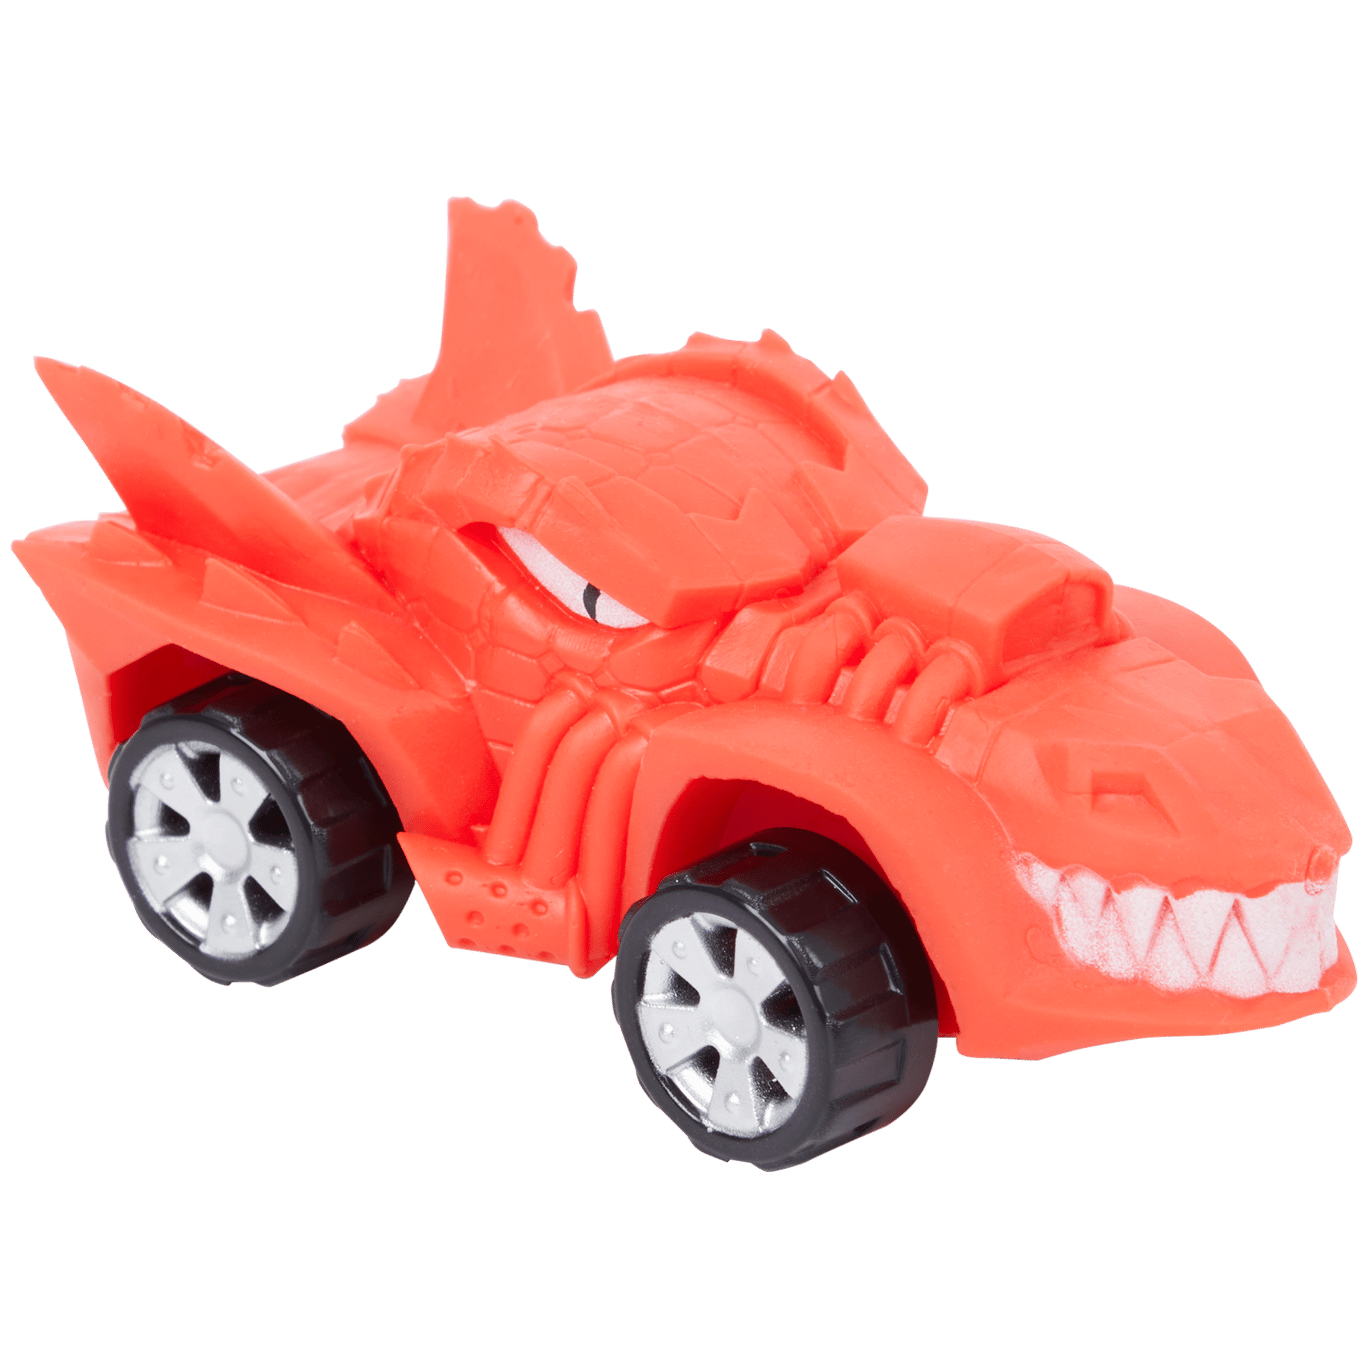 Street Smash Ausziehbares Spielzeugauto in Monsteroptik